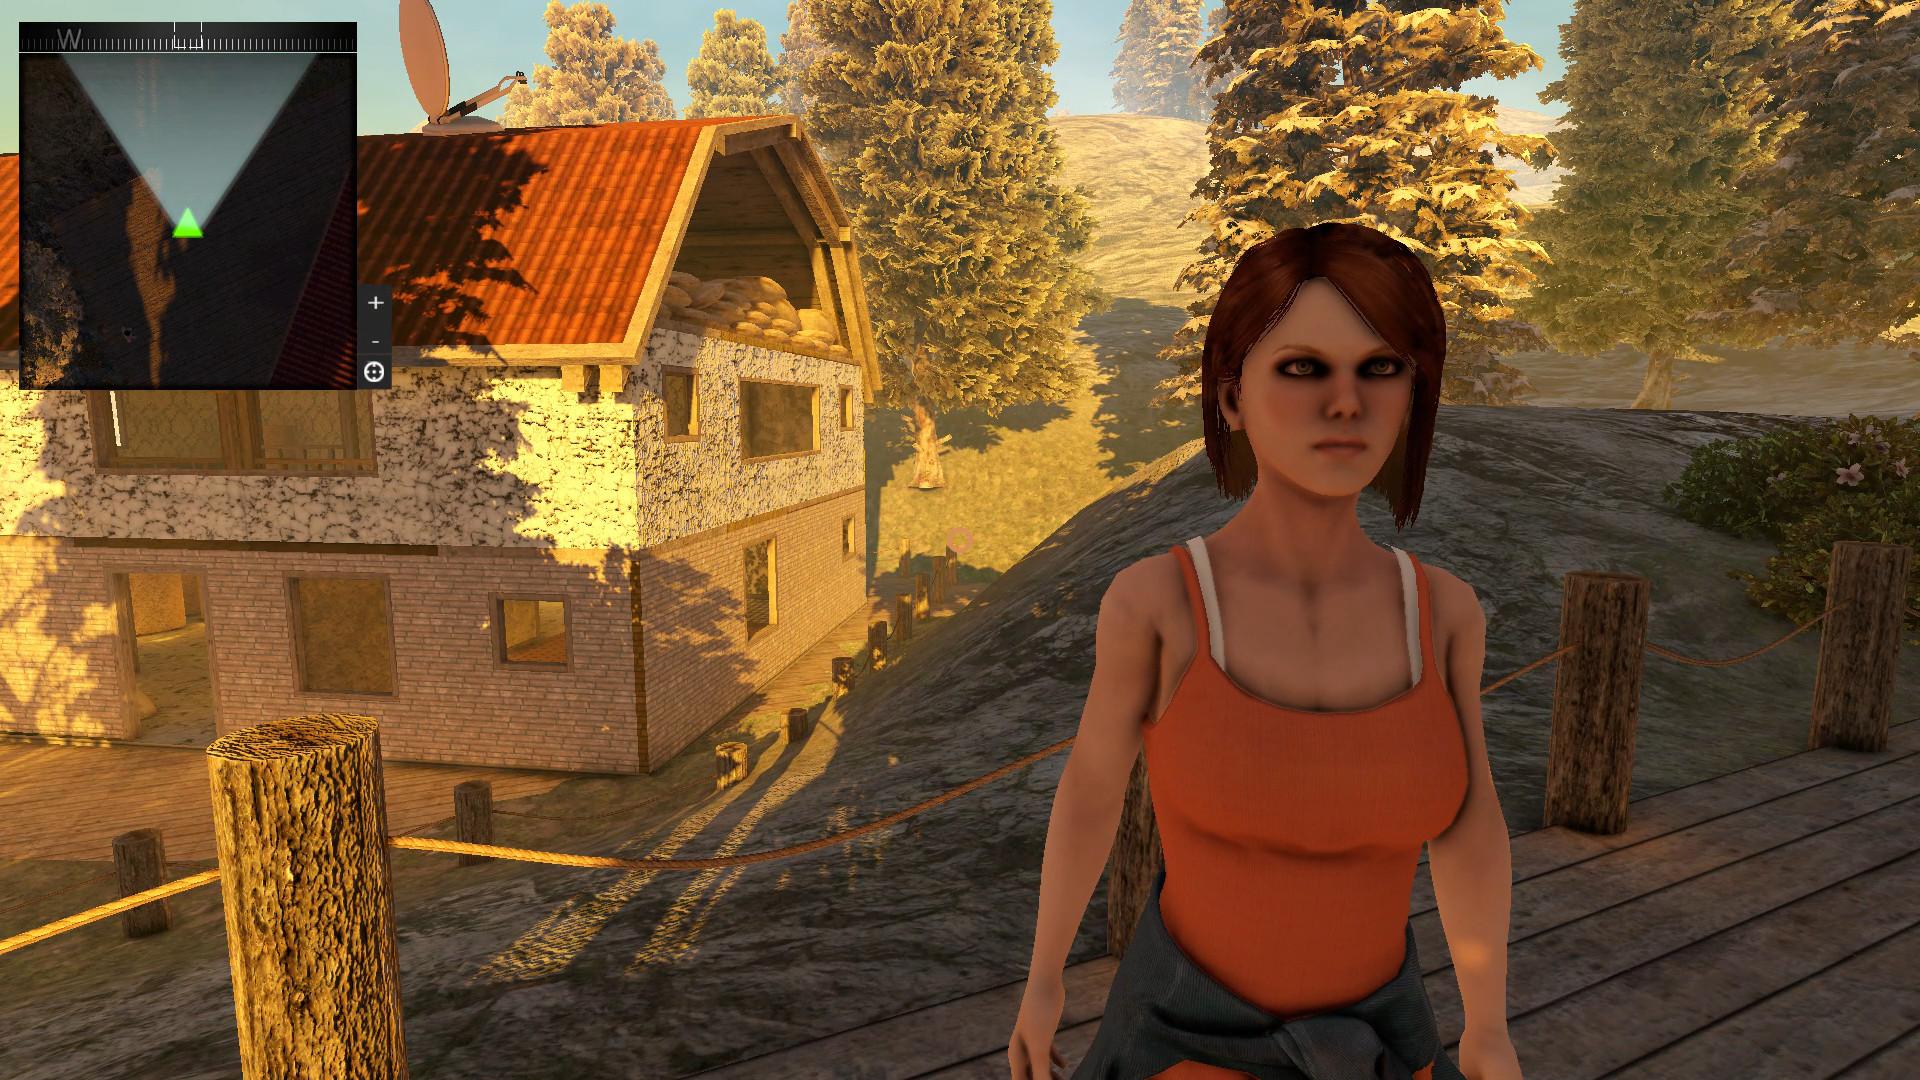 Screenshot №1 from game Endangered